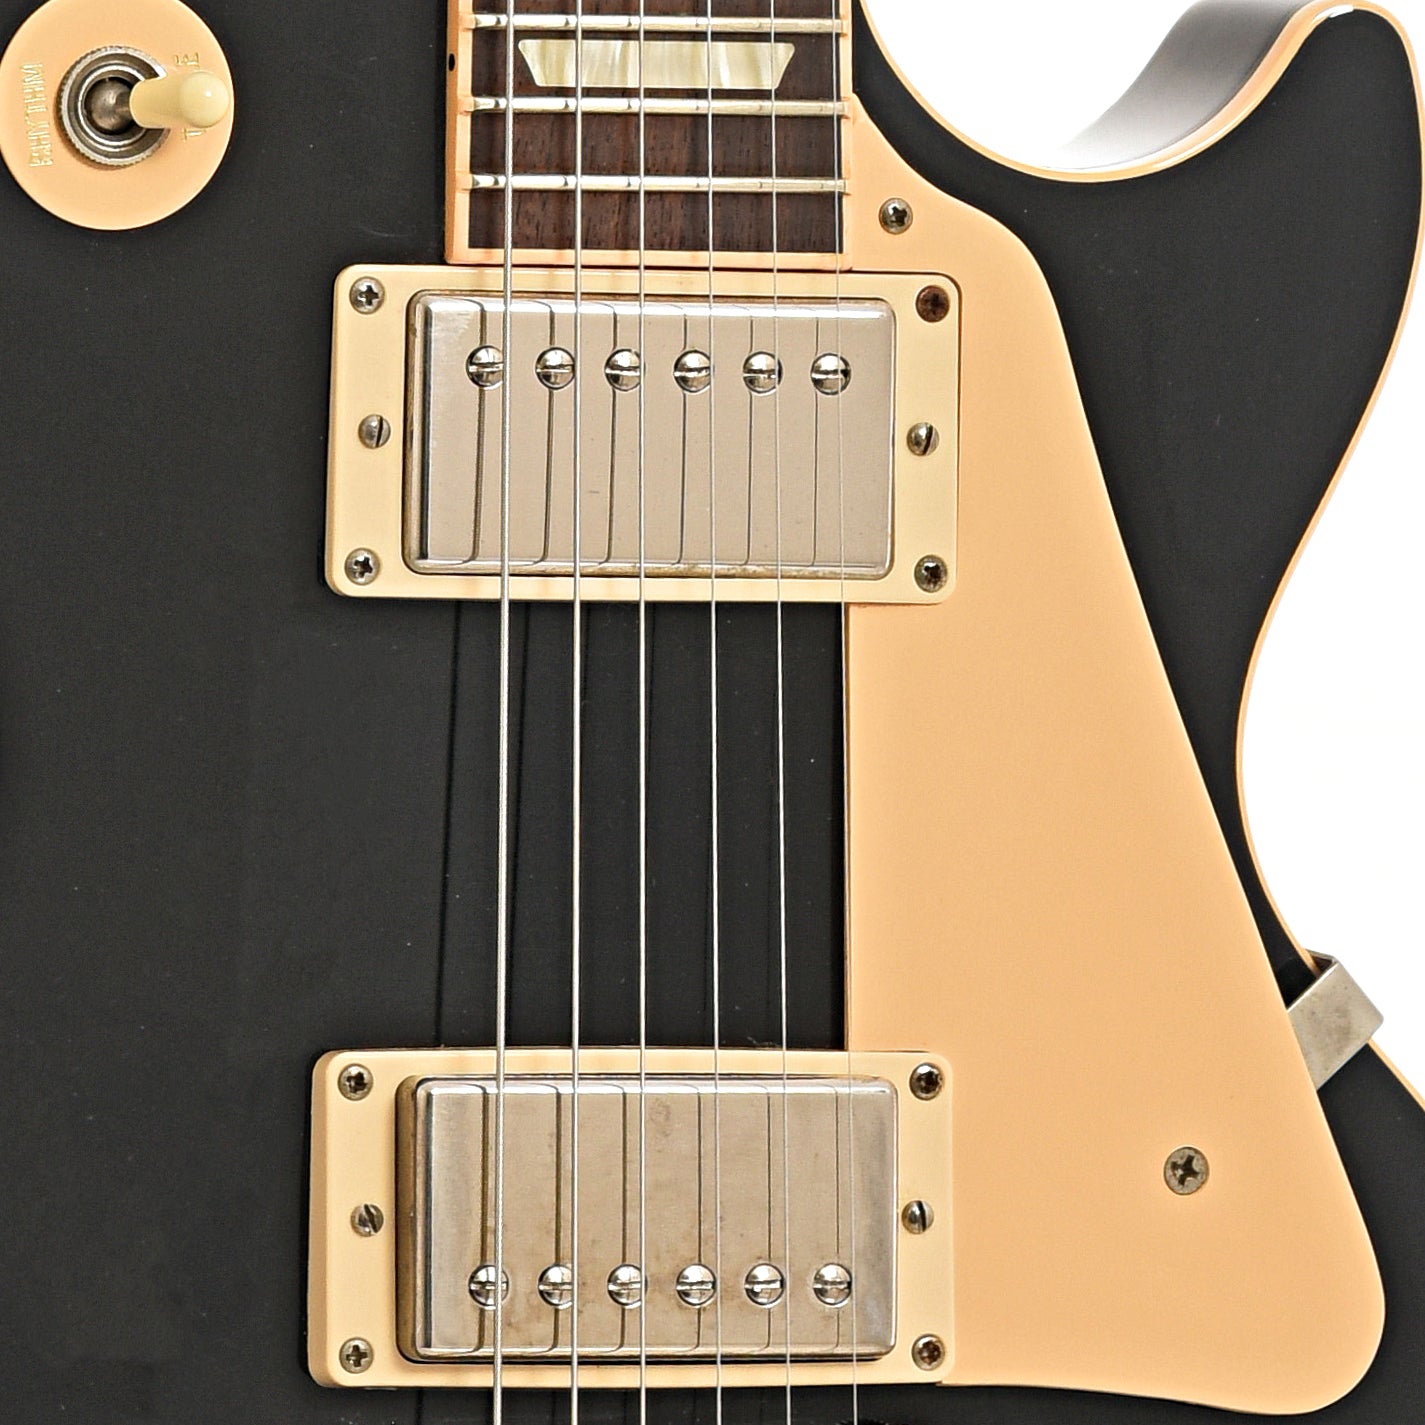 Pickups of Gibson Les Paul Standard